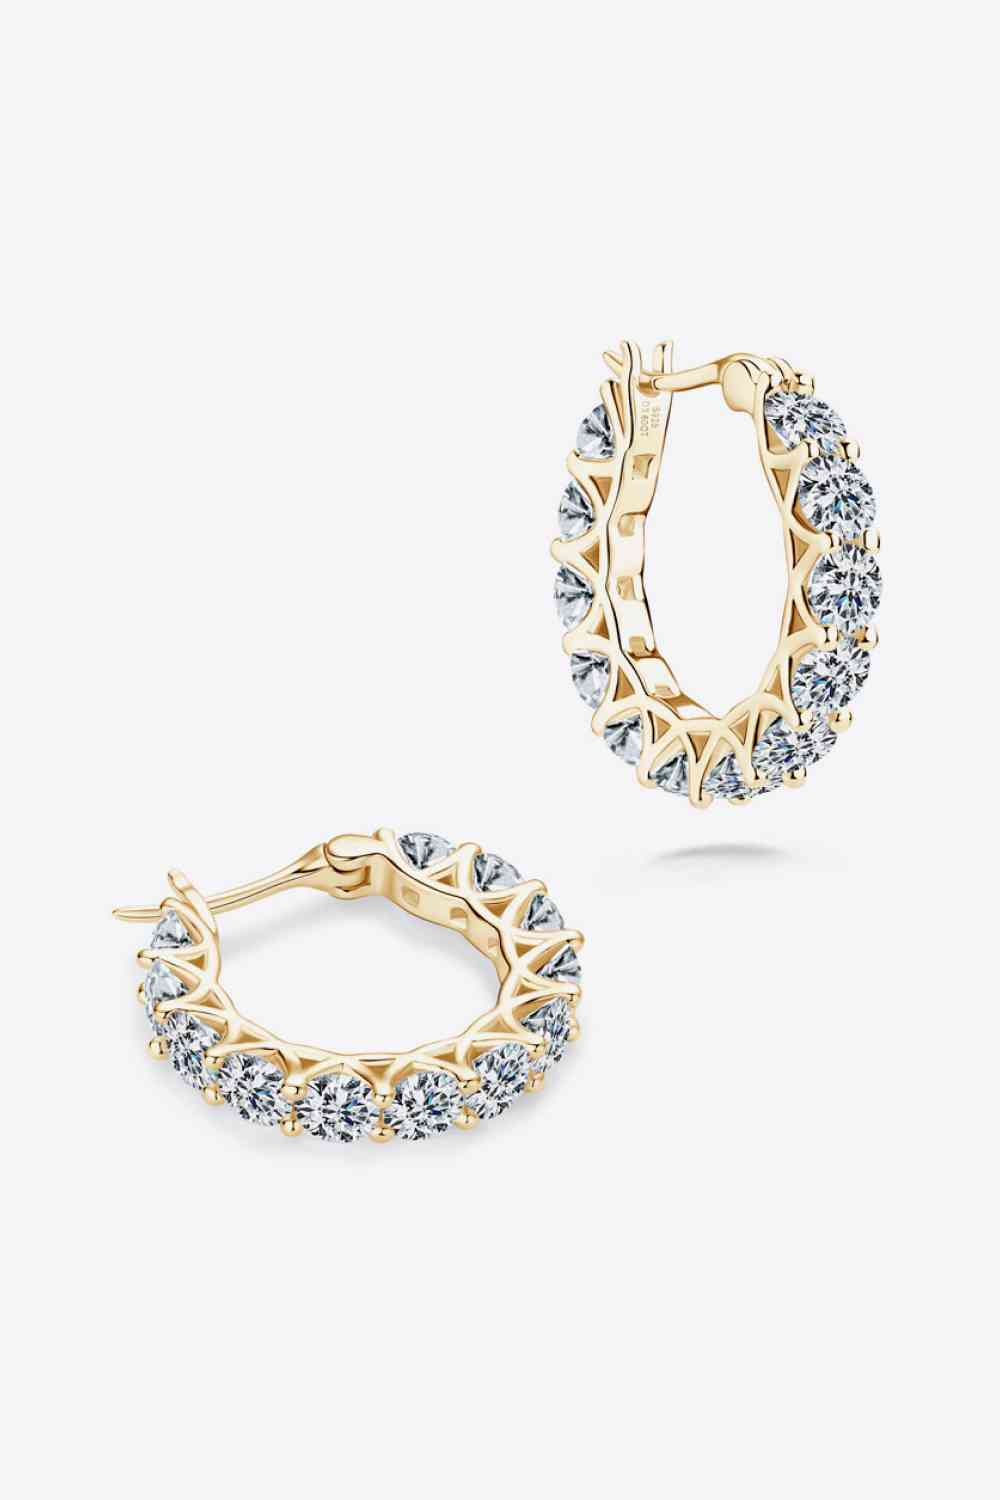 a pair of gold hoop earrings with crystal stones